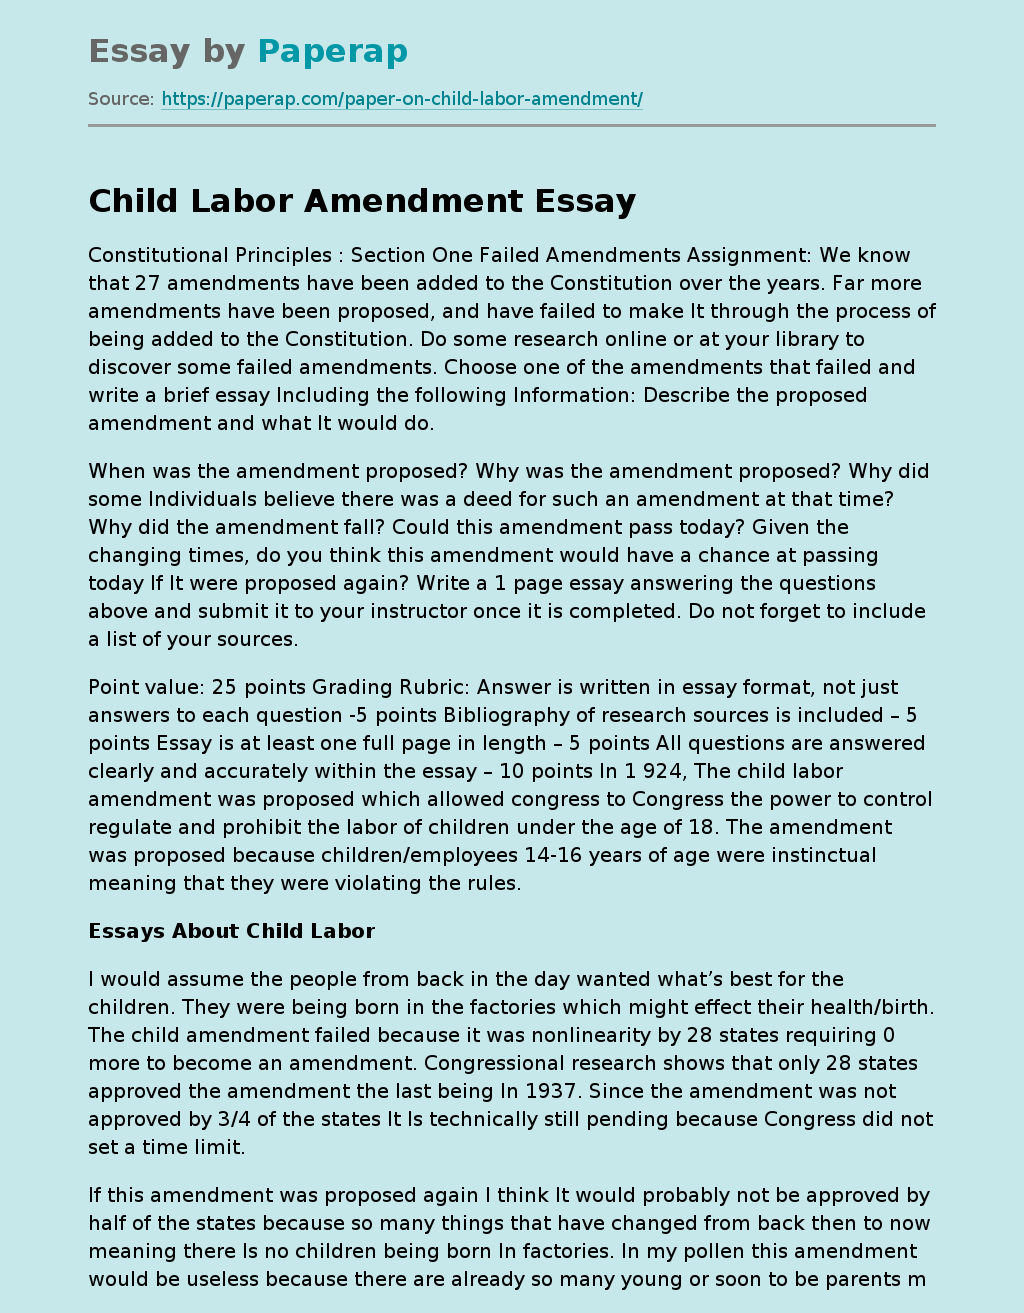 Child Labor Amendment